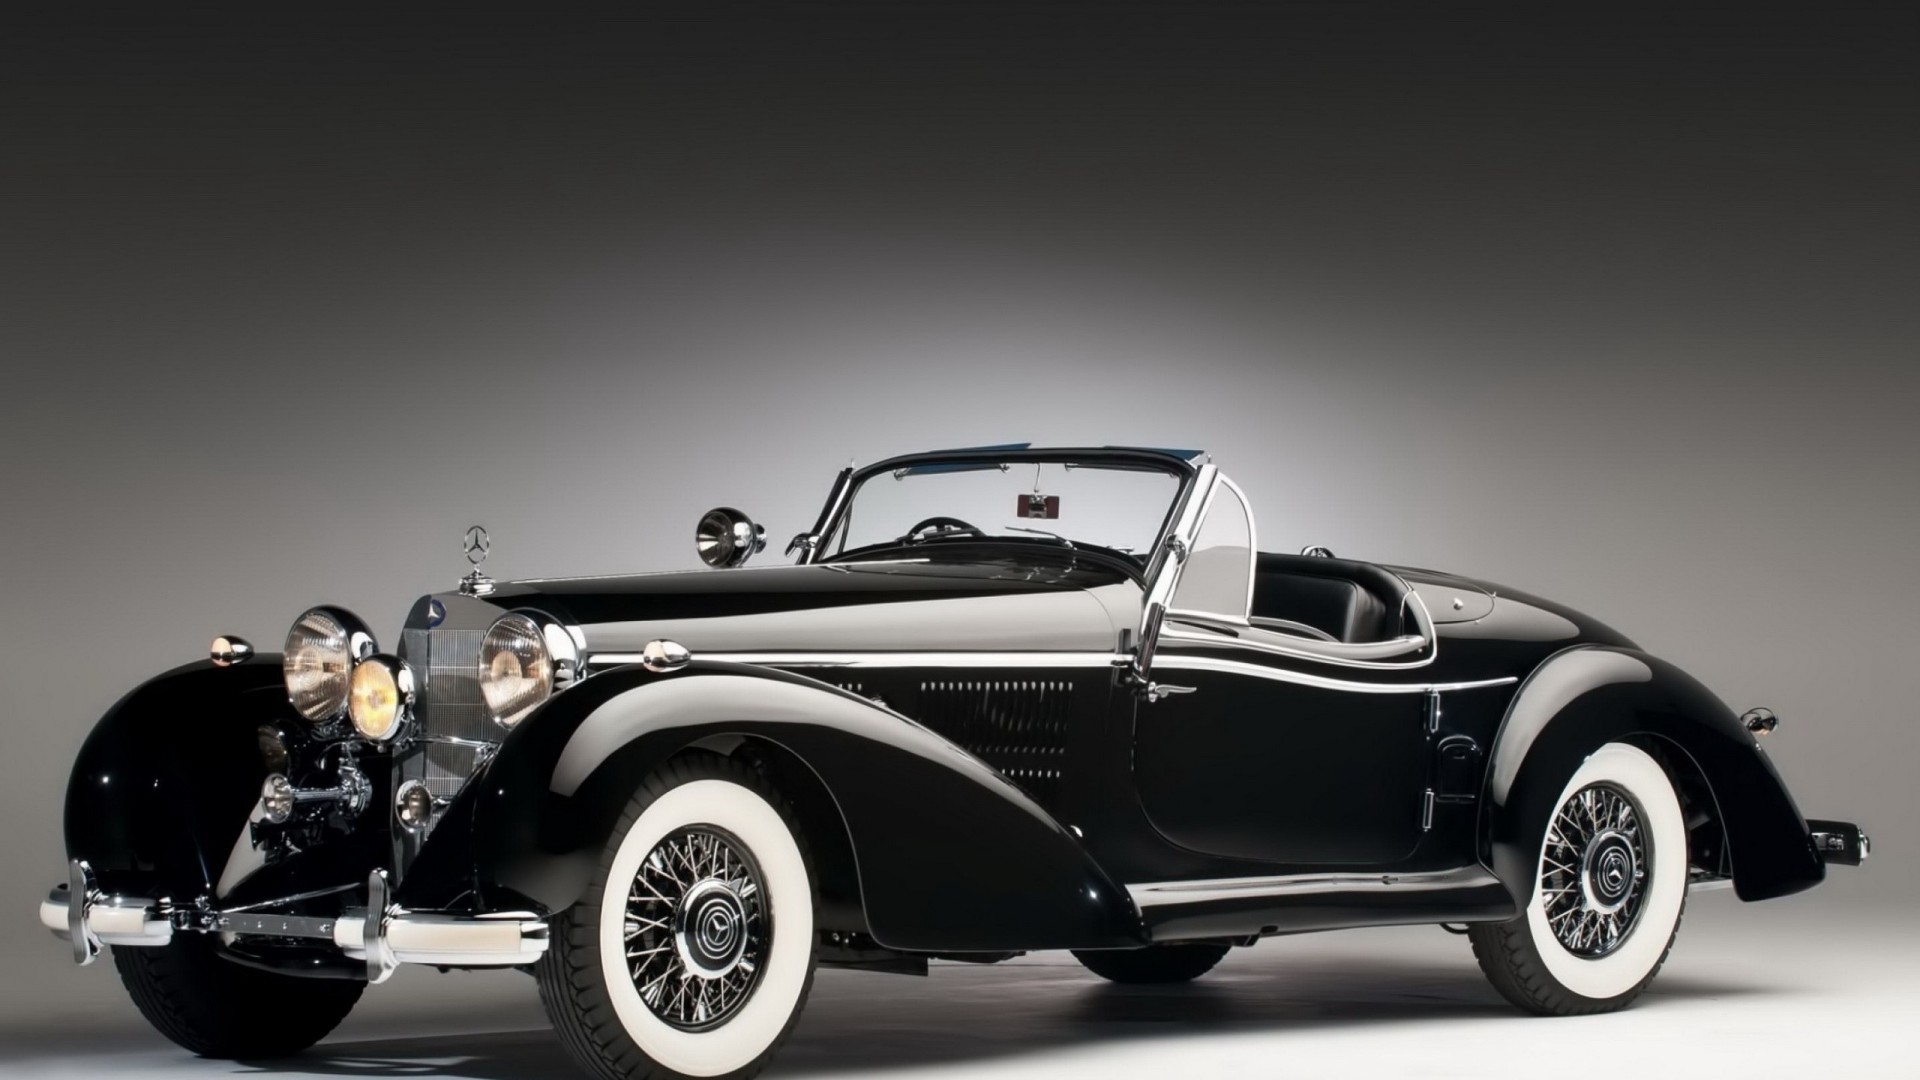 1920x1080 Roundup: The Best Vintage Car Wallpapers | CrispMe